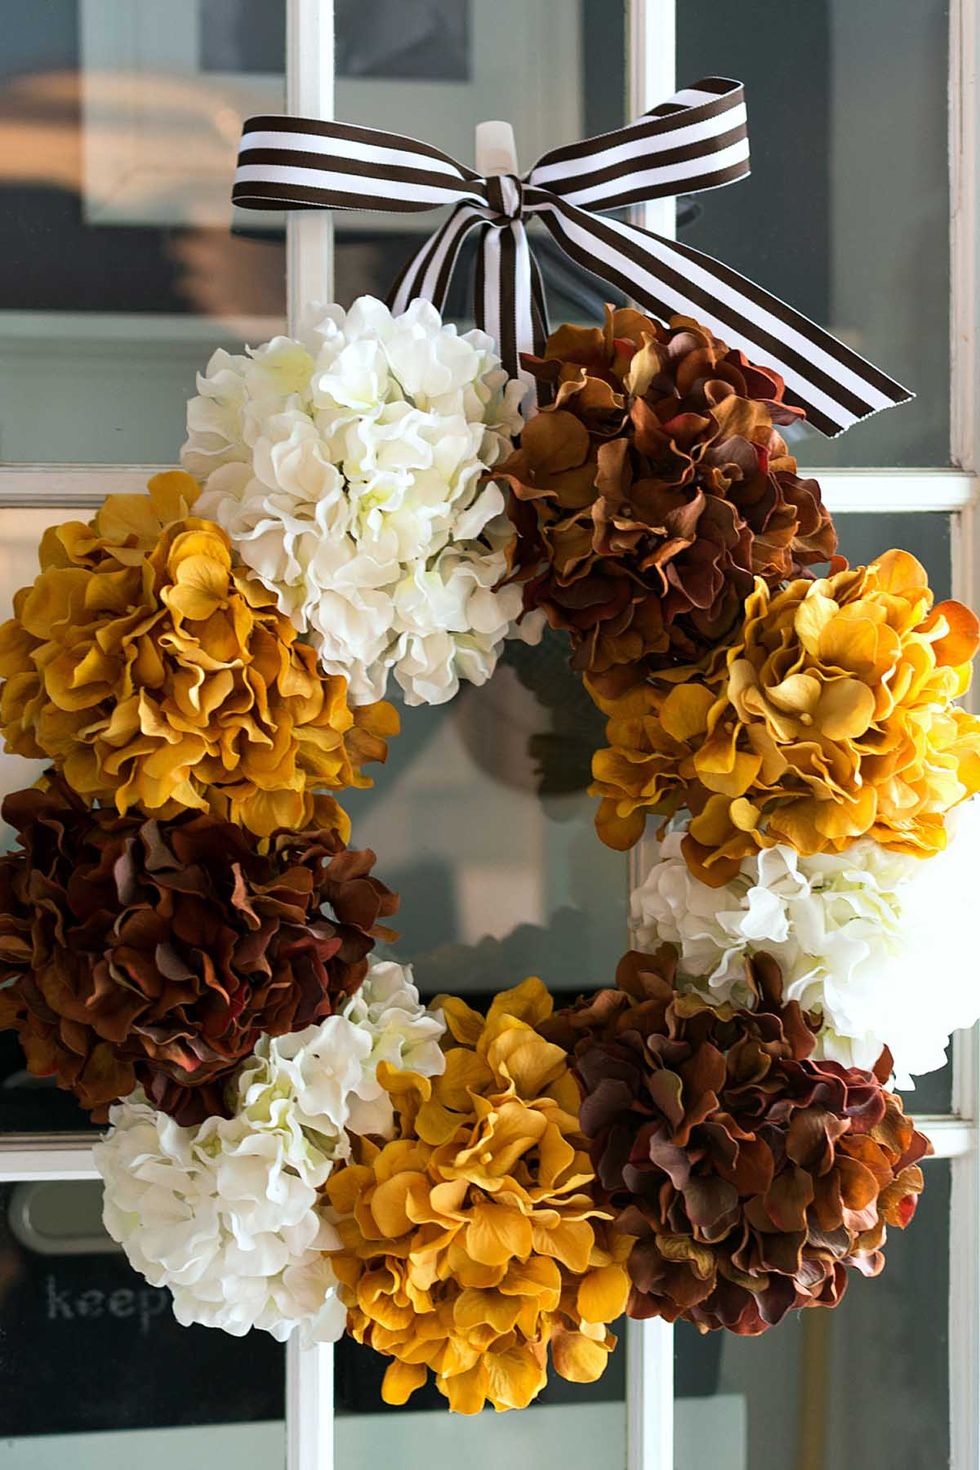 How to Make a DIY Hydrangea Wreath for Fall (An Easy Fall Decor Idea) -  Jenna Kate at Home